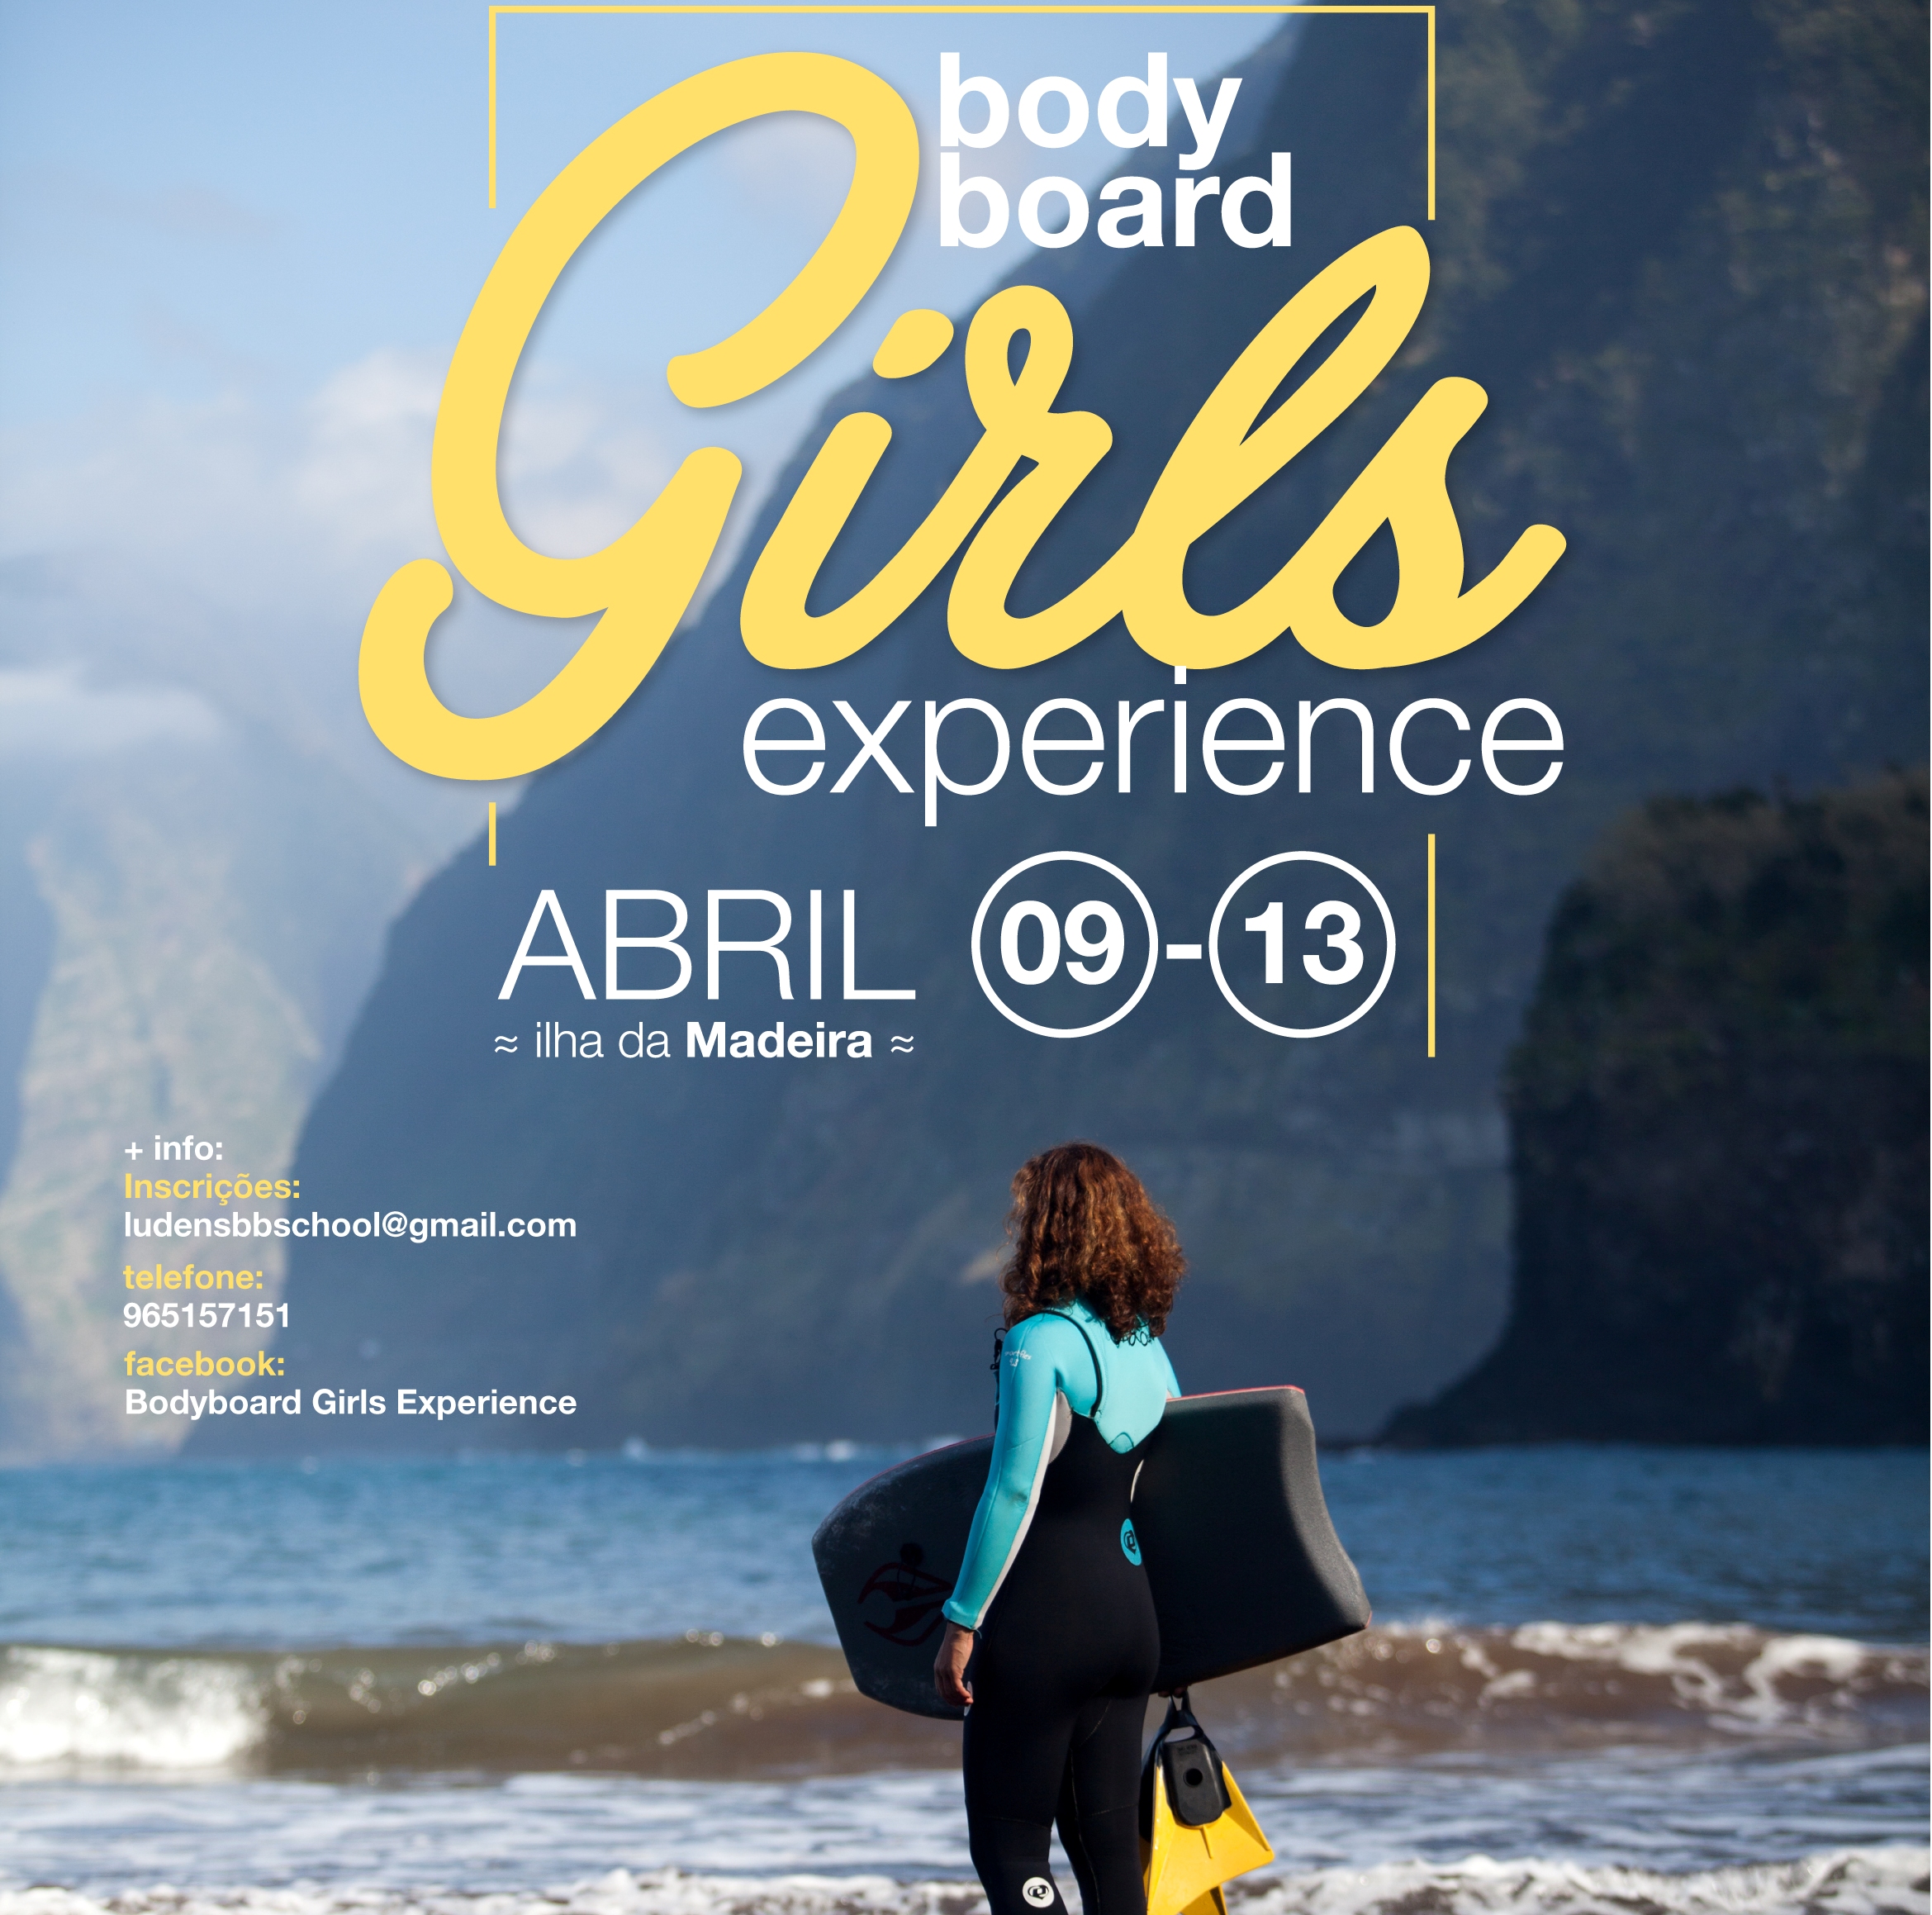 Bodyboard Girls Experience